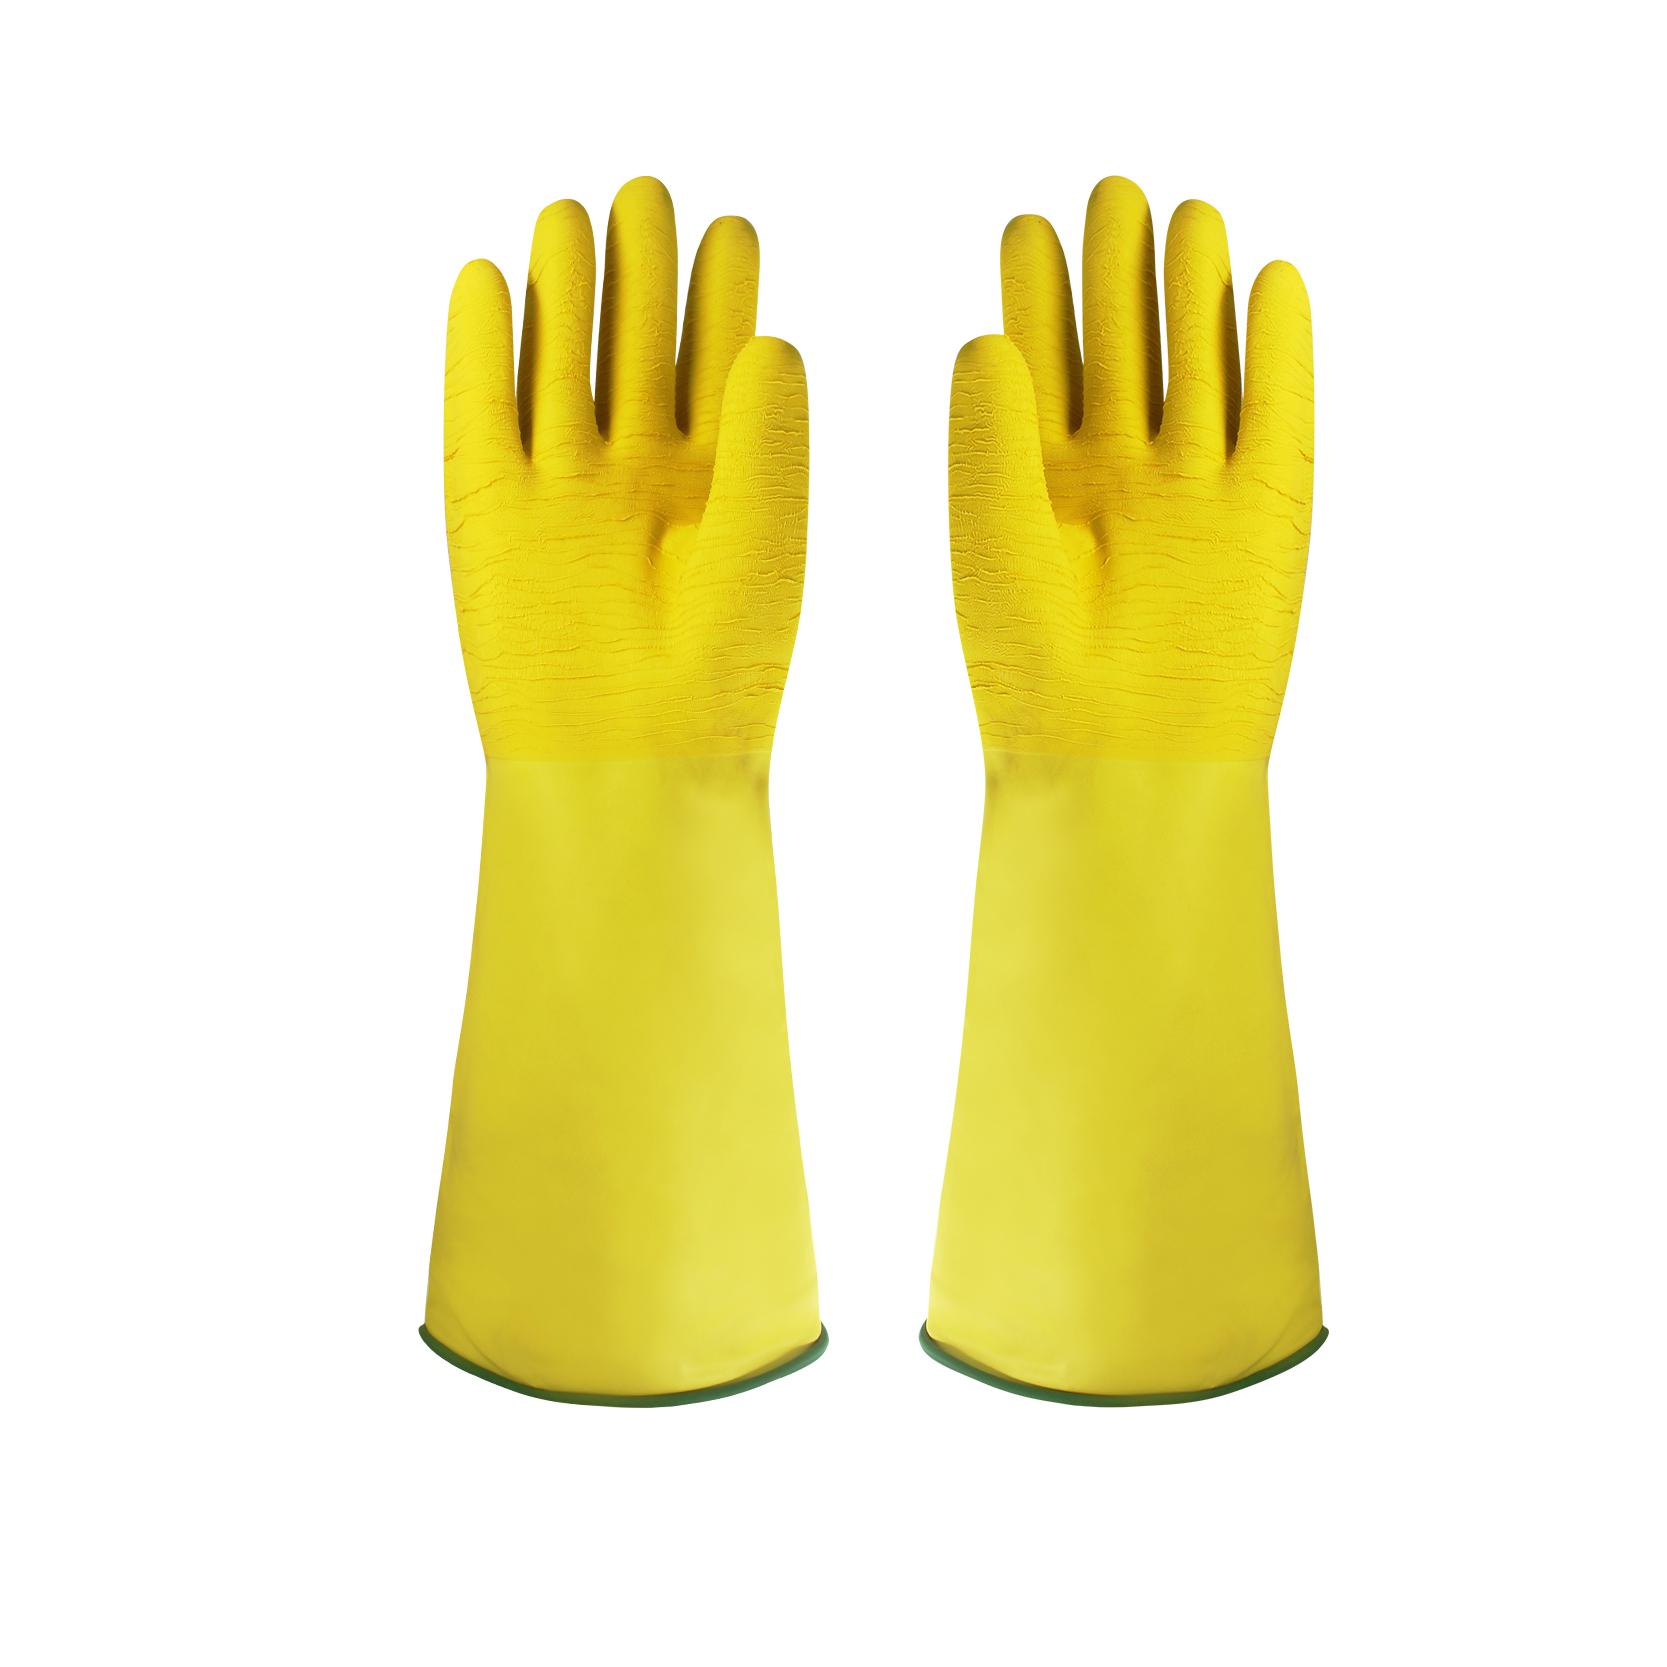 Sarung tangan lateks kerja keselamatan perlindungan mekanikal sarung tangan industri keselamatan tugas berat